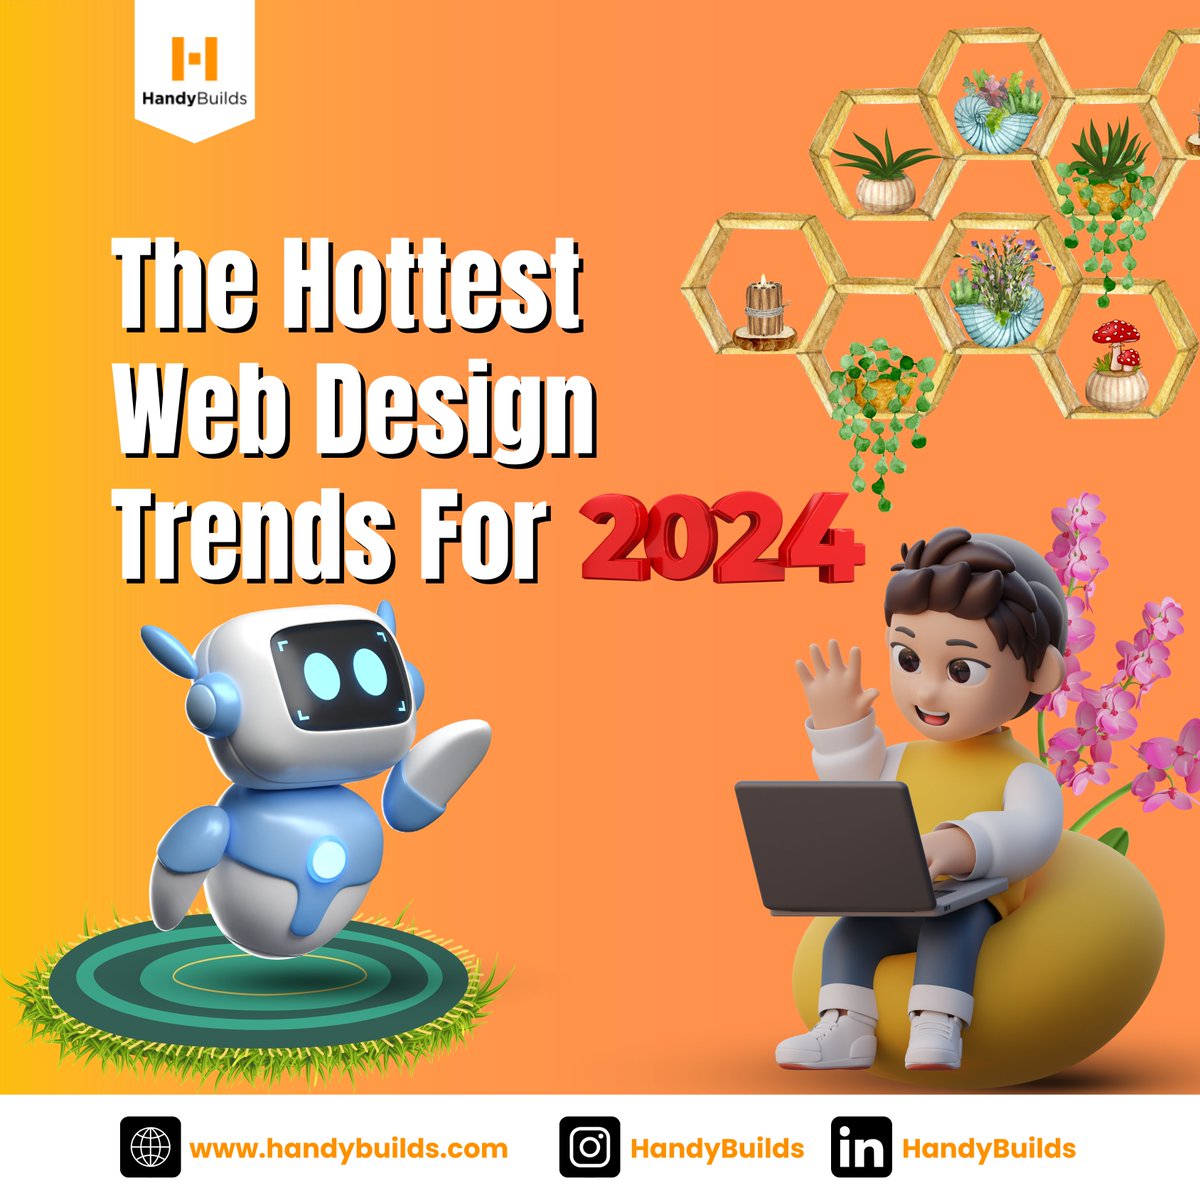 Web Design Trends in 2024!
#WebDesignTrends #WebDesign2024 #HandyBuilds #DigitalDesign #Innovation #AI #UserExperience #DesignWithUs #webdevelopment #2024trends #webapp #seo #digitalagency #webdesign #itsupport #itsolutions #3ddesign